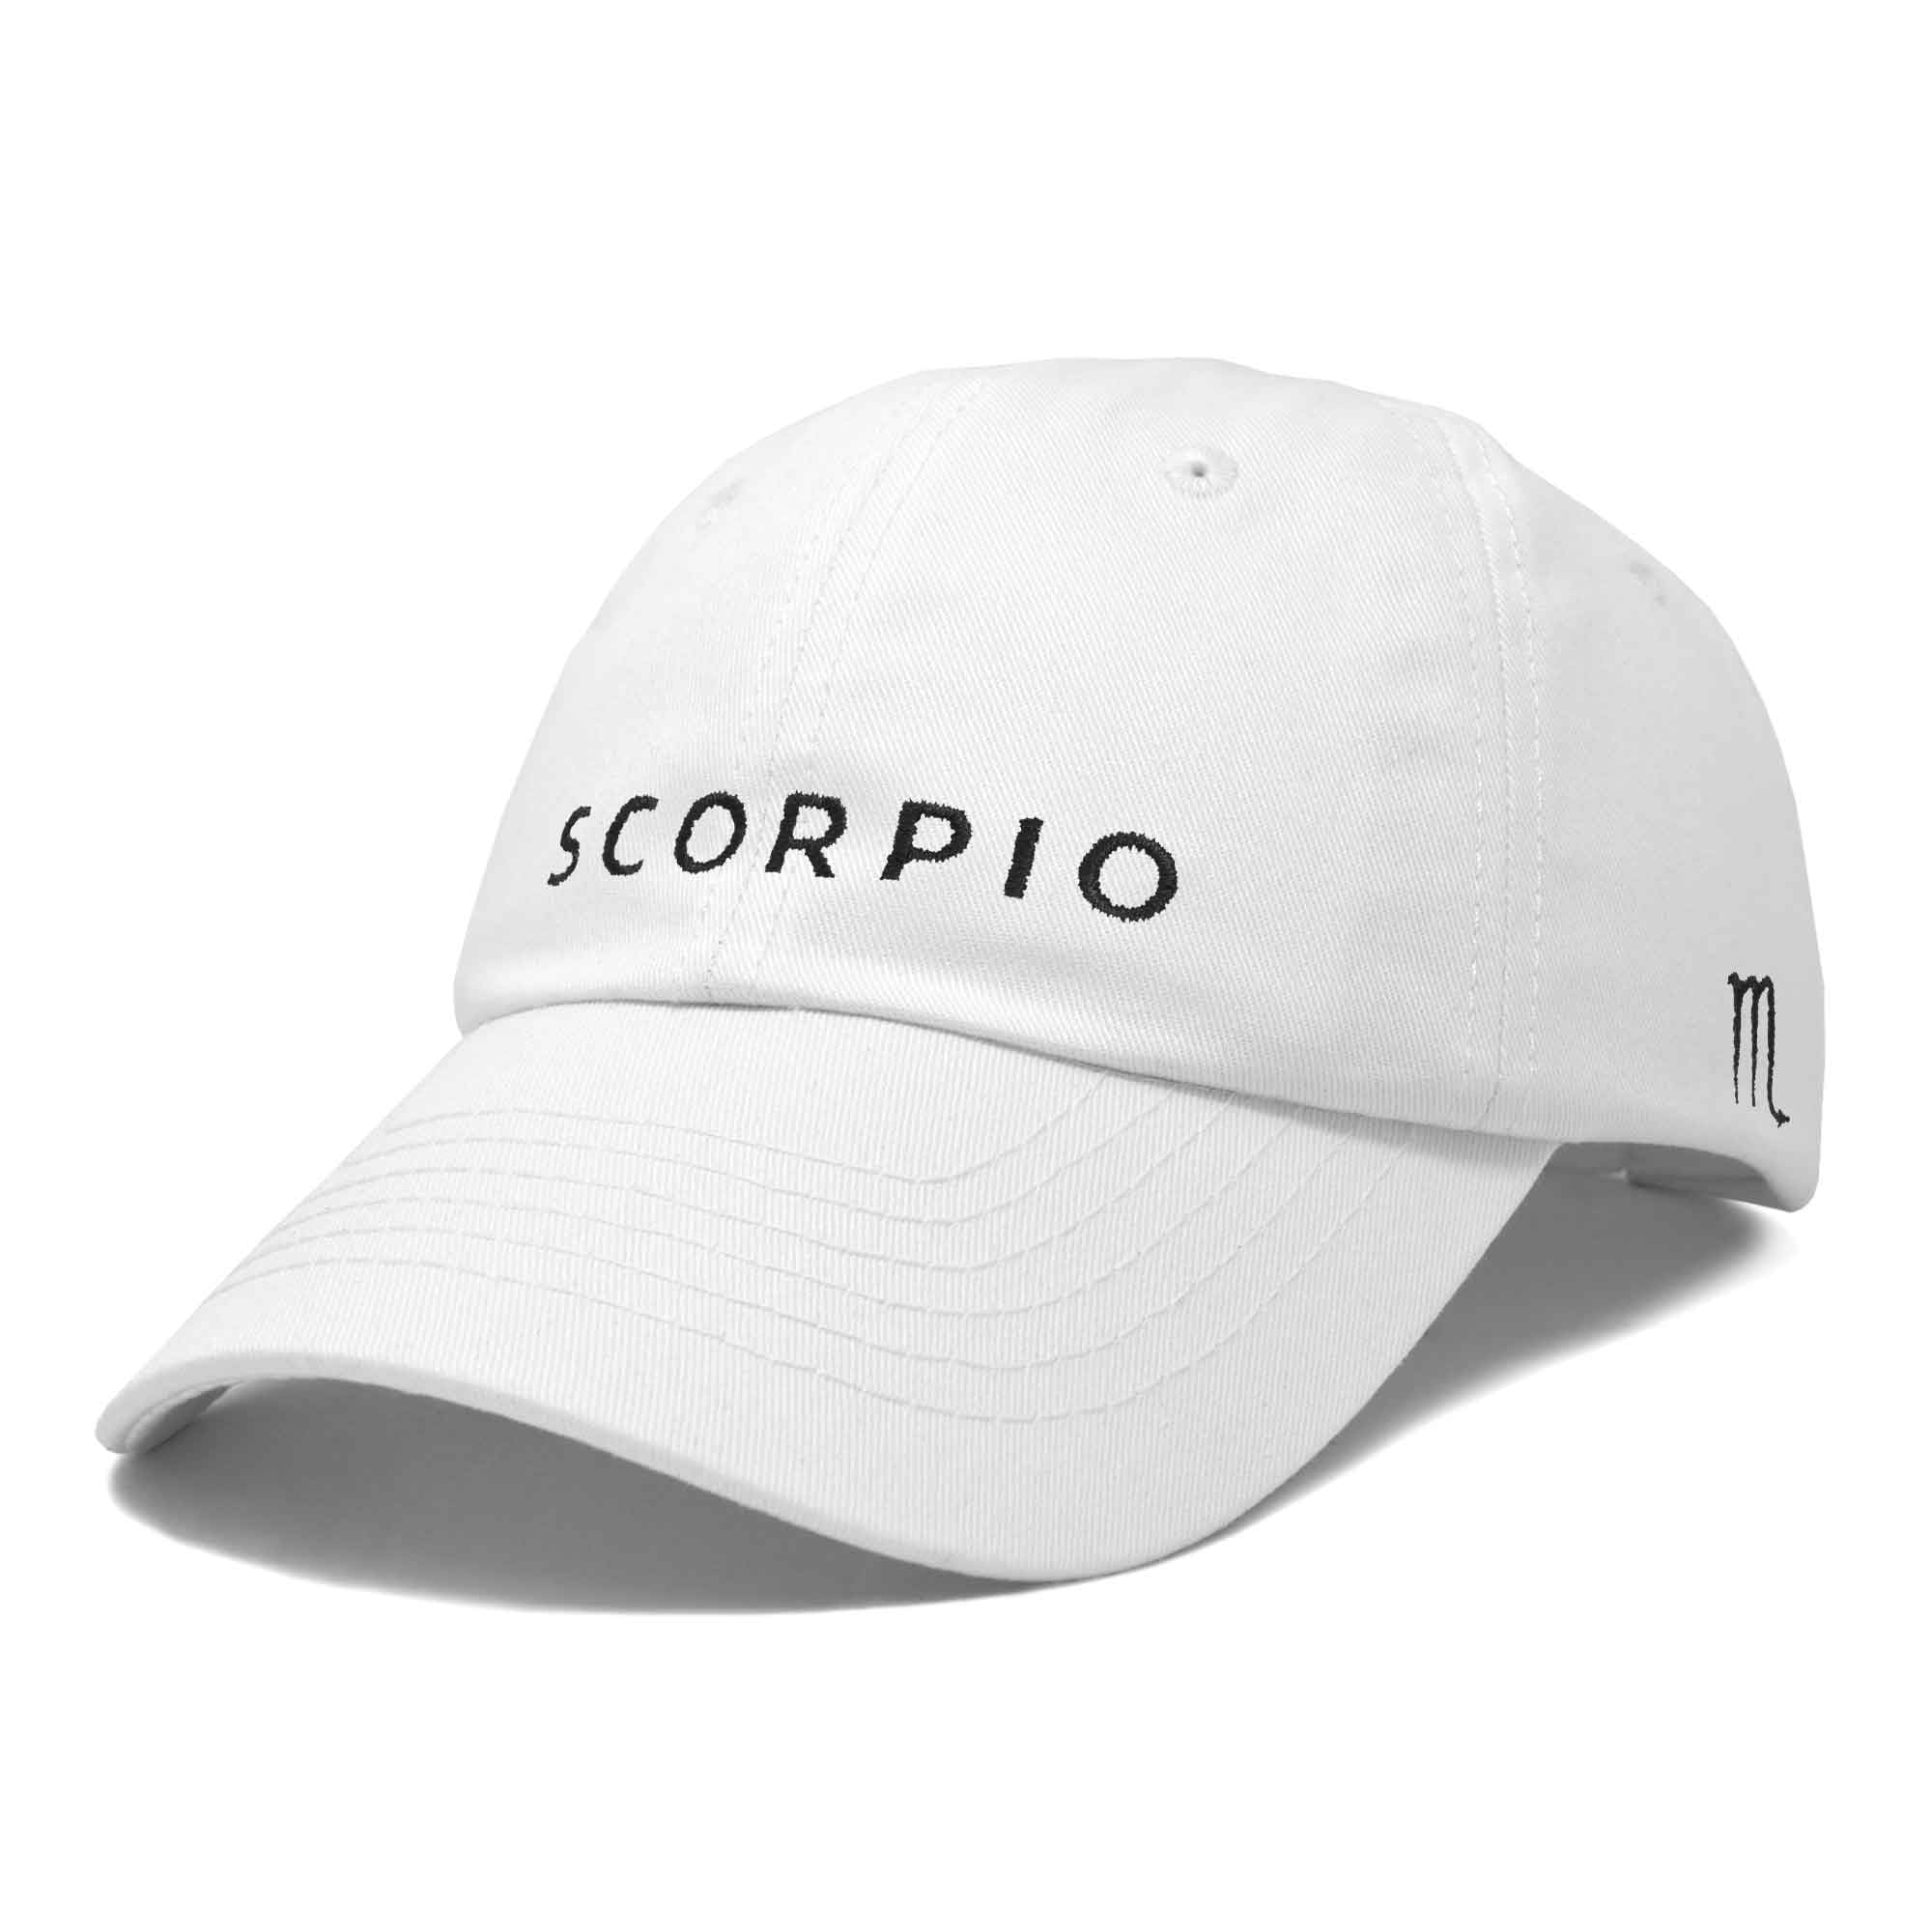 White Trucker Hats for Men Embroidered Cap Embroidery Snapback Hat The Zodiac Capricornus 